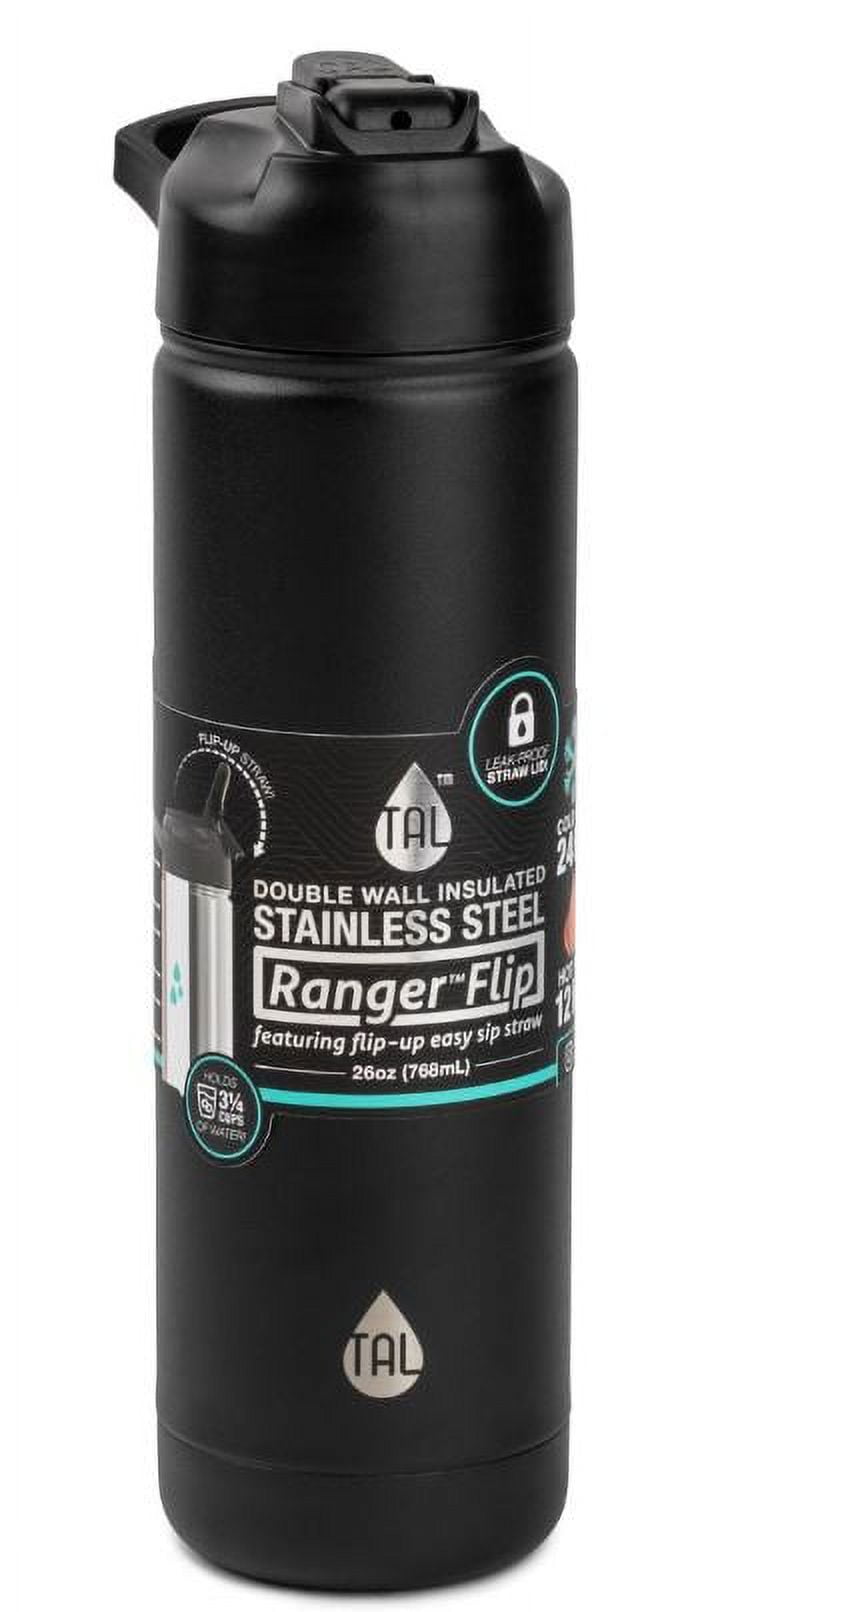 TAL Stainless Steel Ranger Water Bottle 26 fl oz, Black